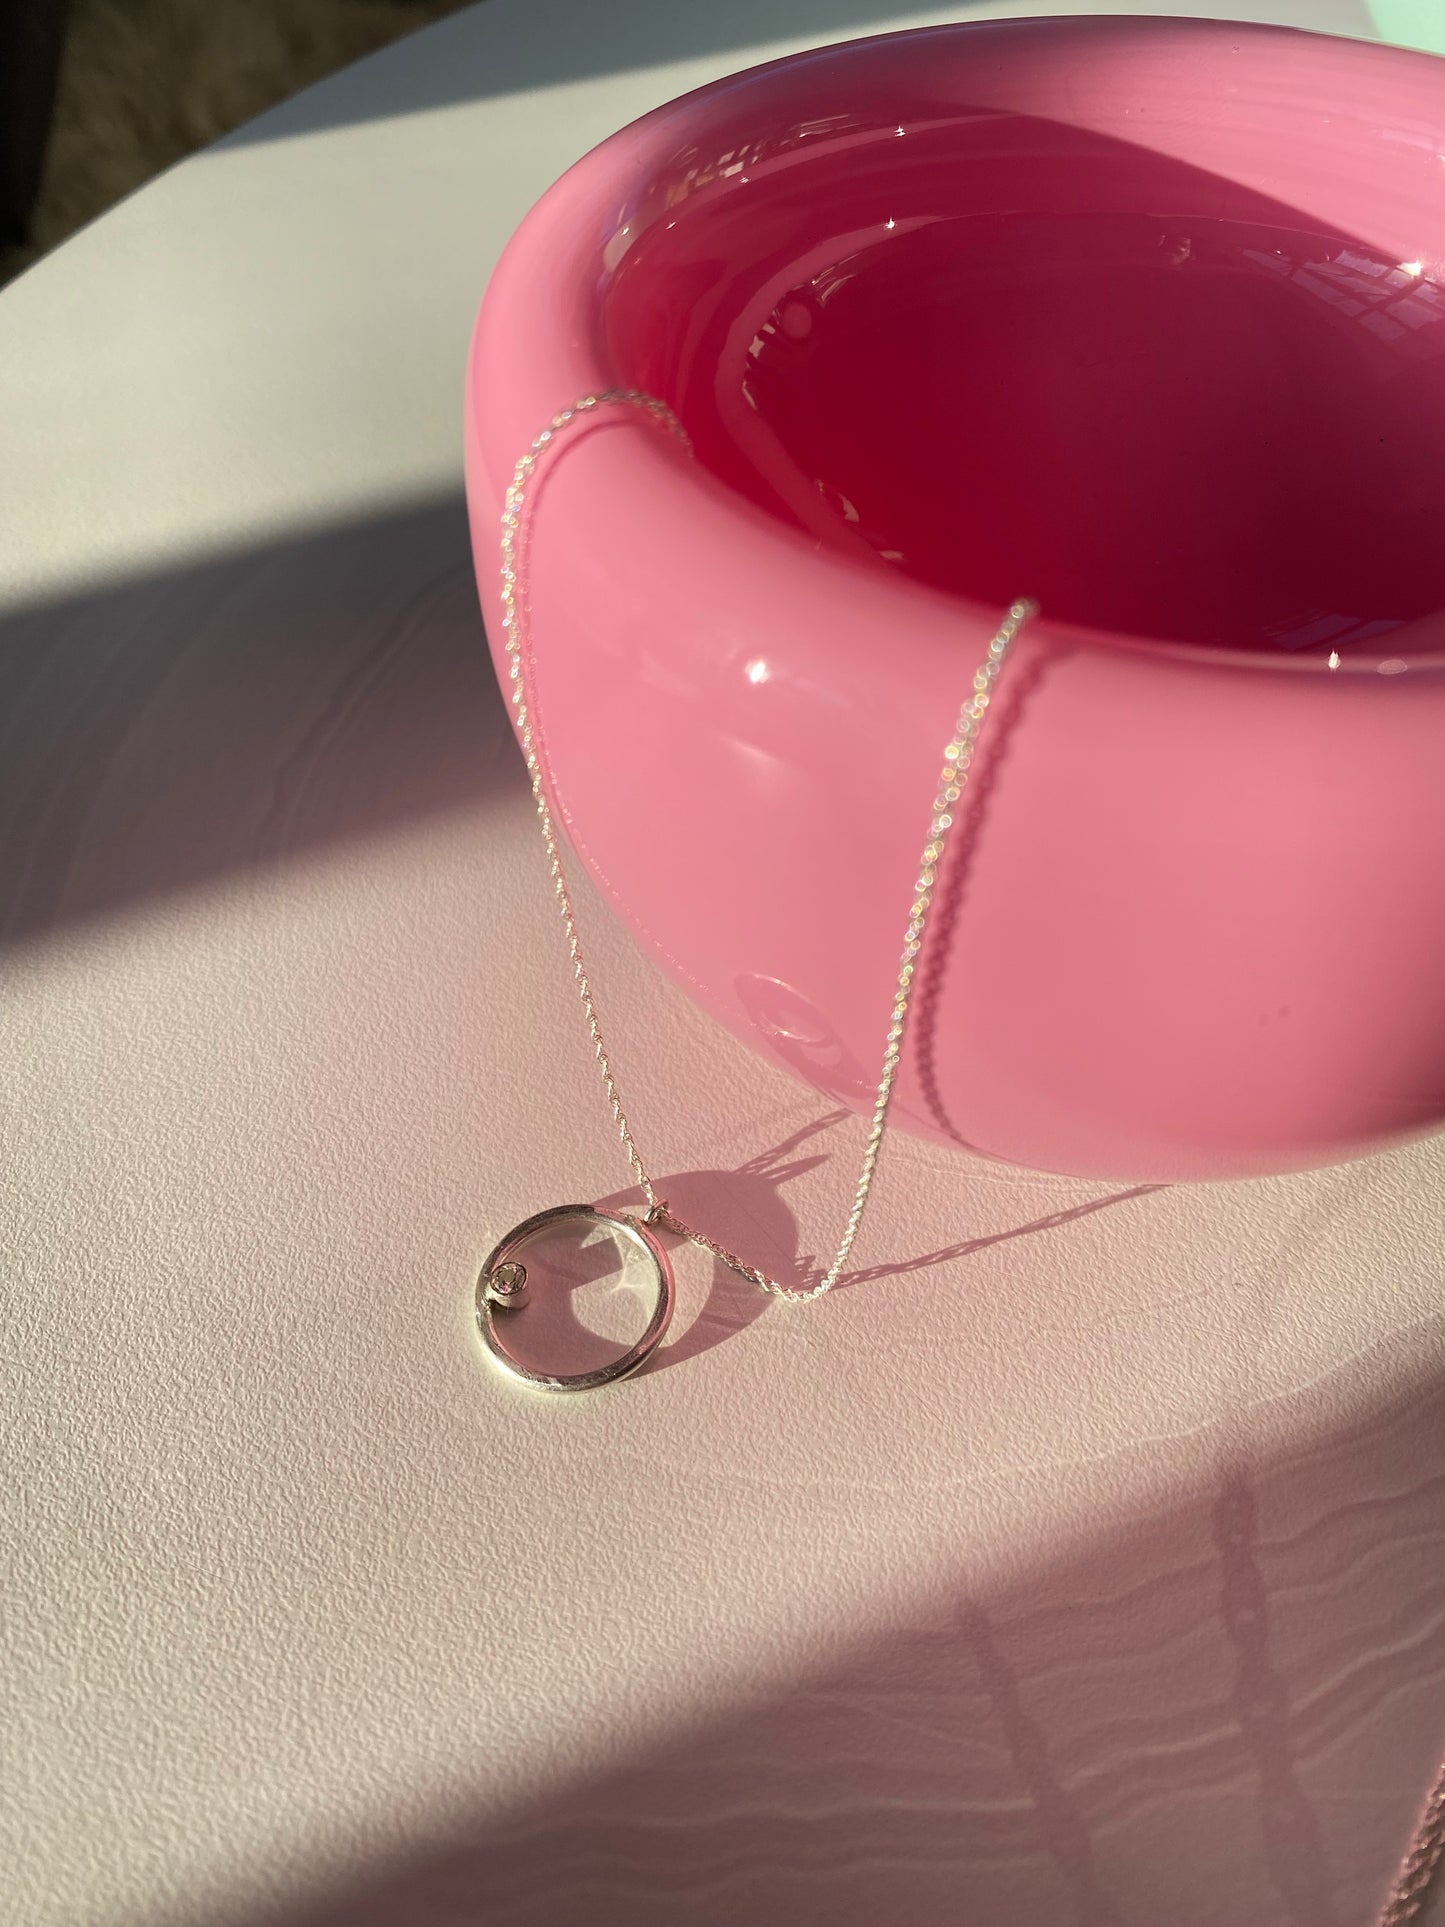 Handblown Glass Mini "Fulvio" Bowl - Hot Pink Opal